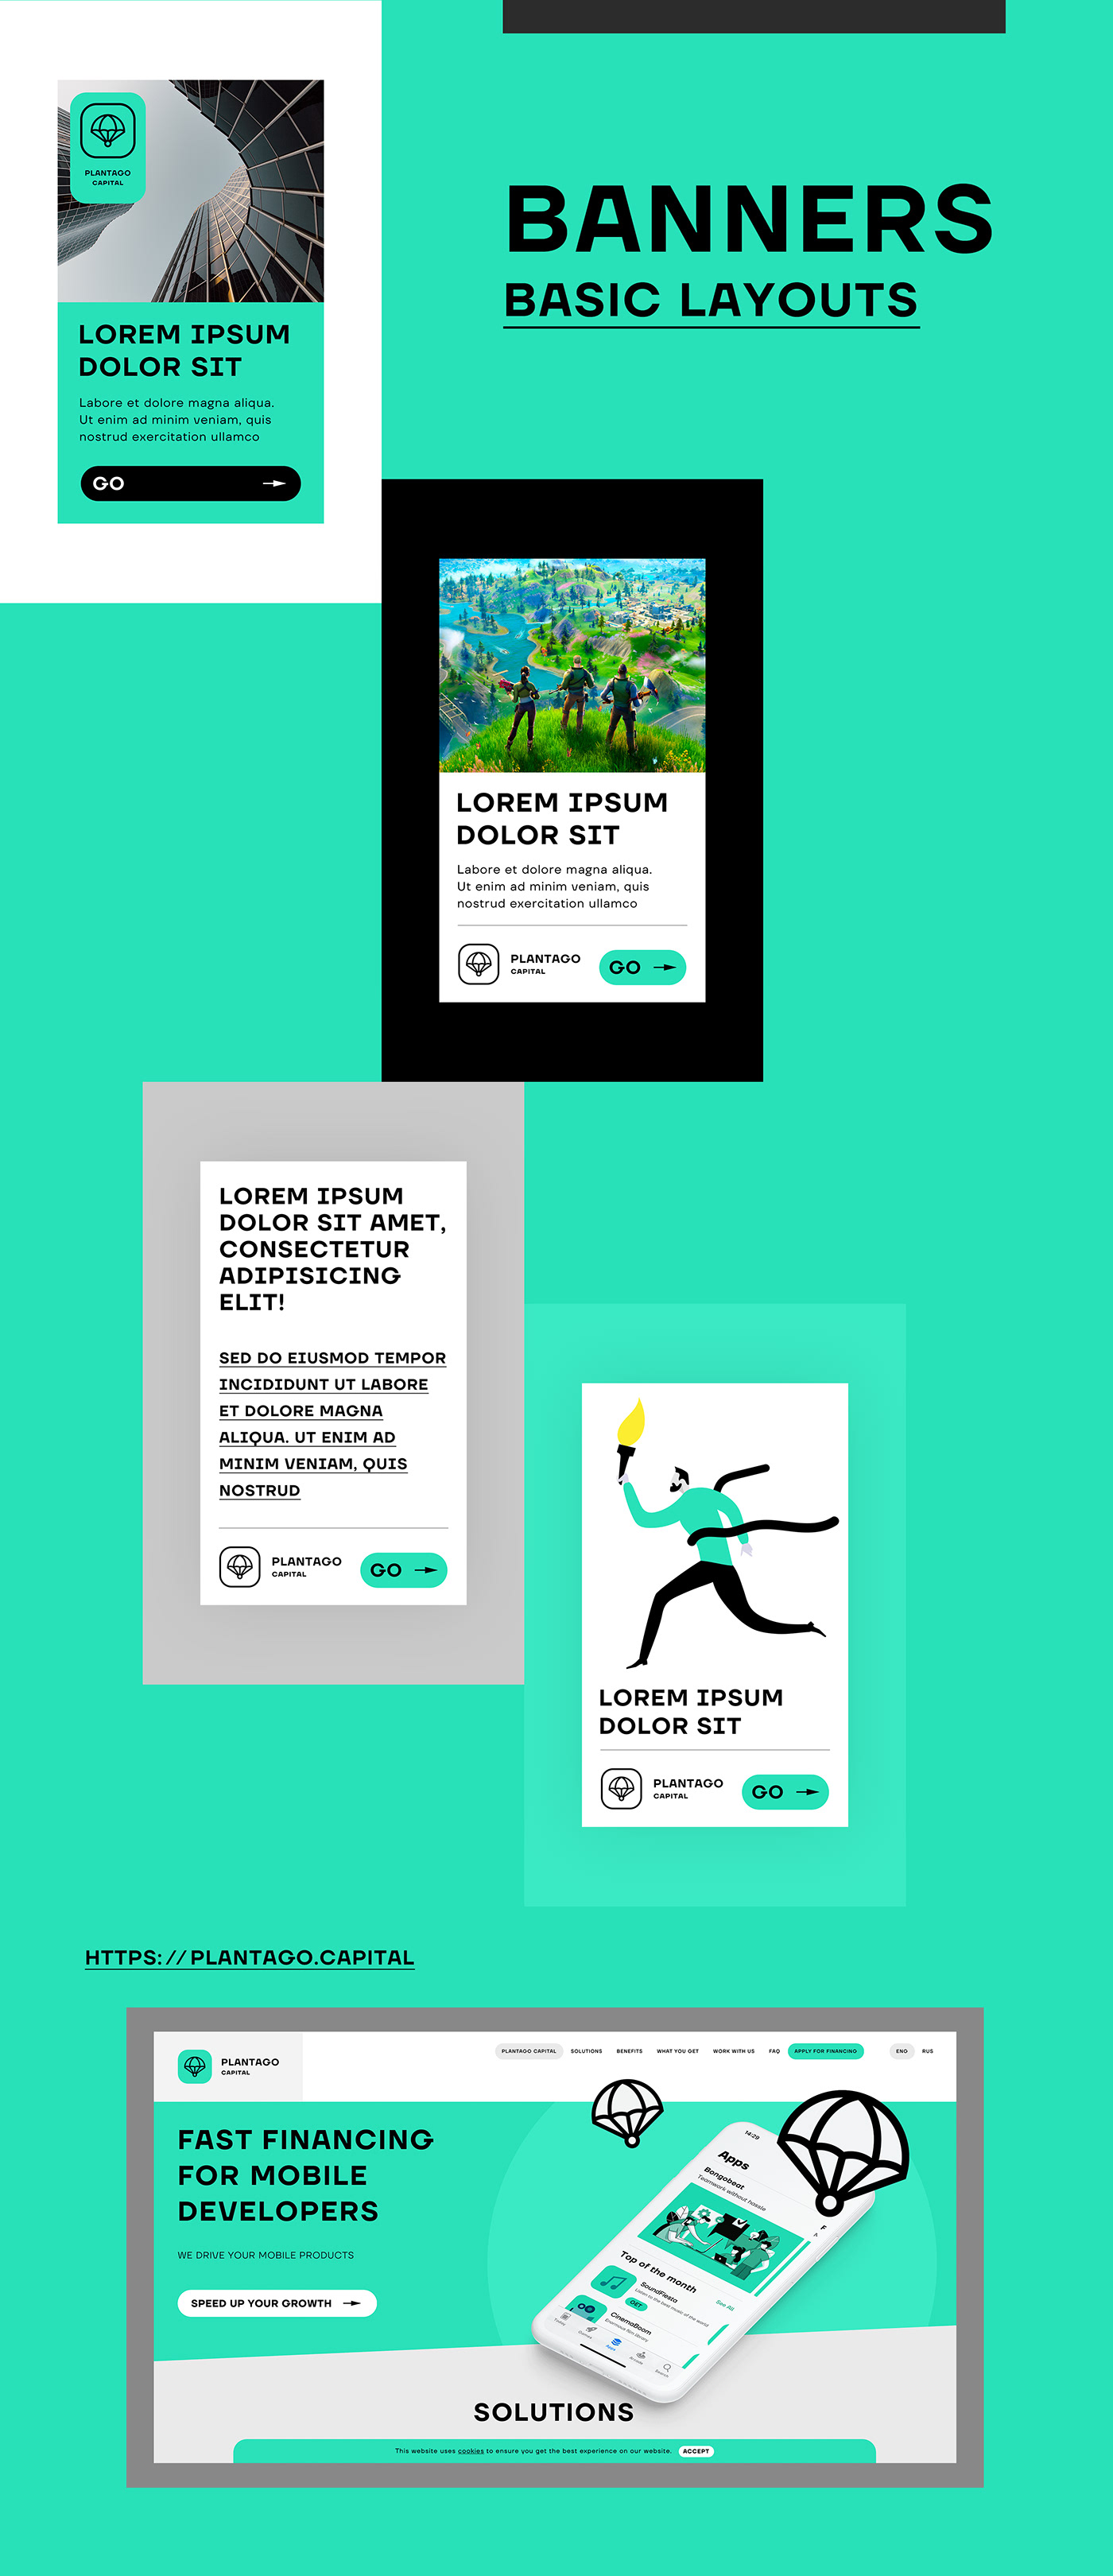 banners design system guidelines illustrations Investments landing page logo mint color Responsive web design